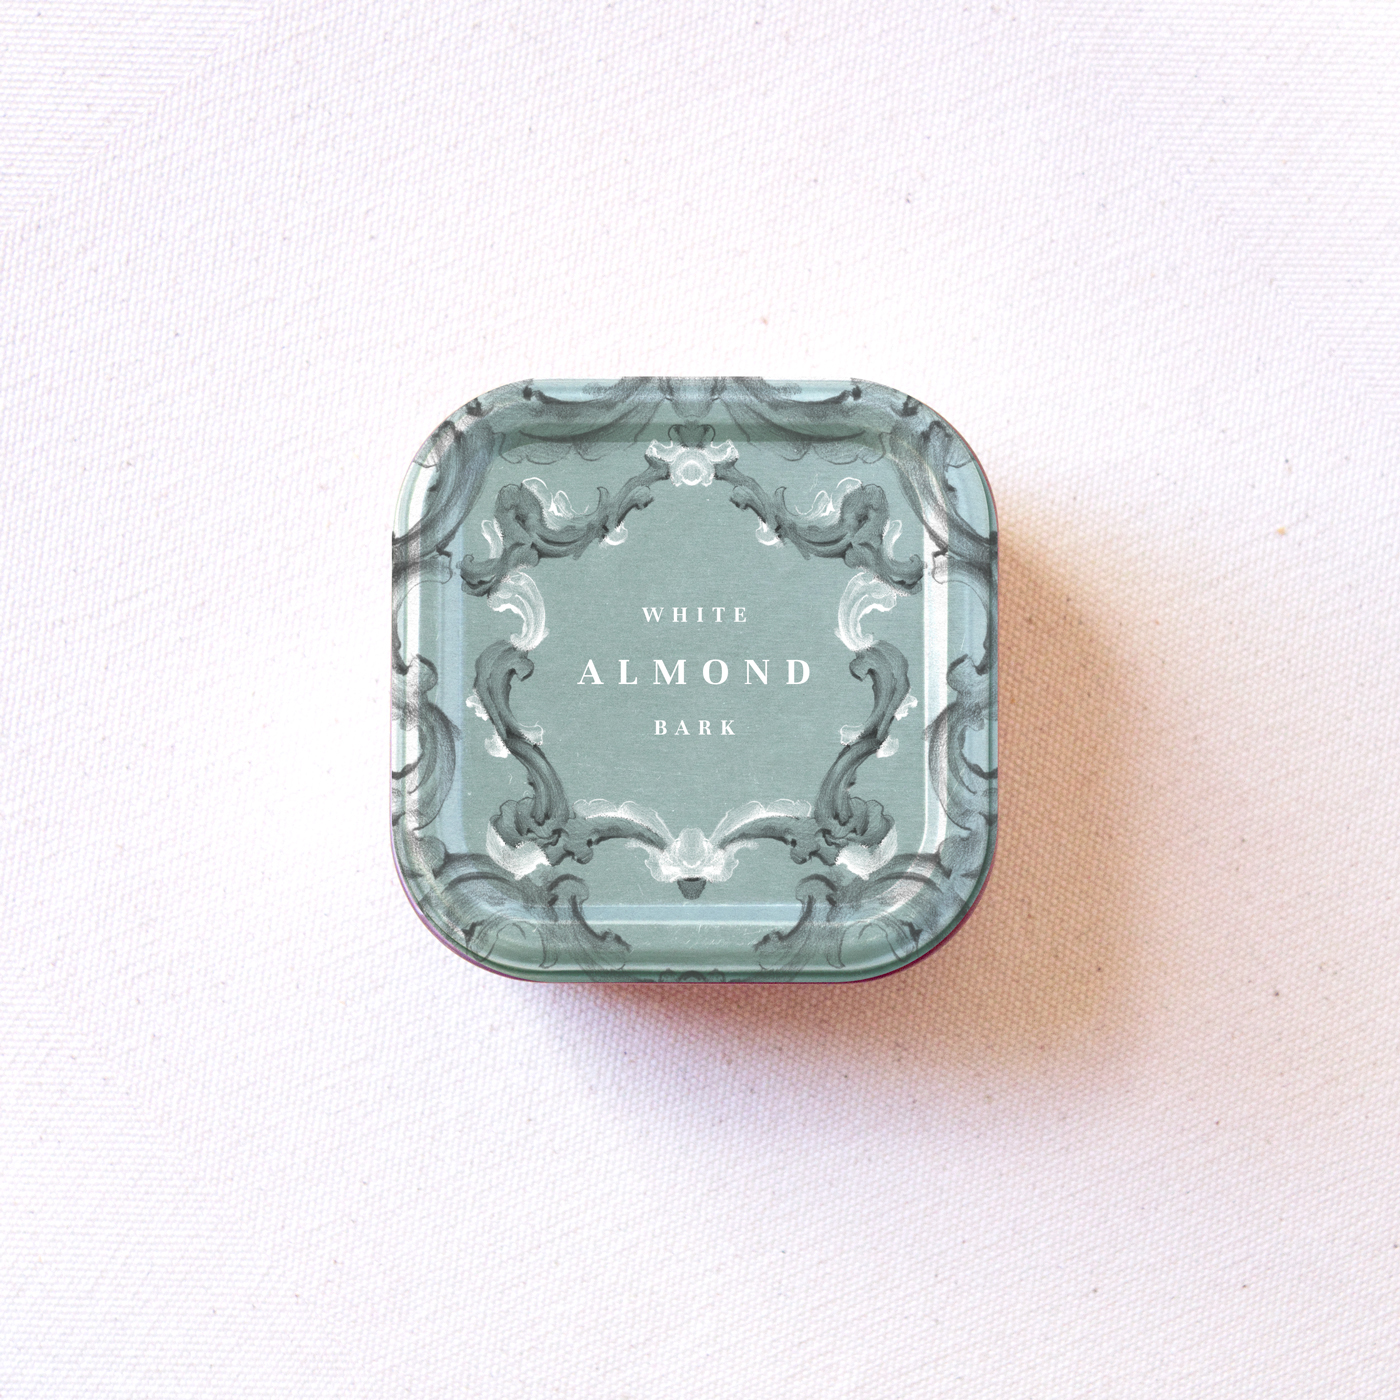 ornate chocolate luxury Beautiful feminine vintage metallic Rose Gold silver Packaging